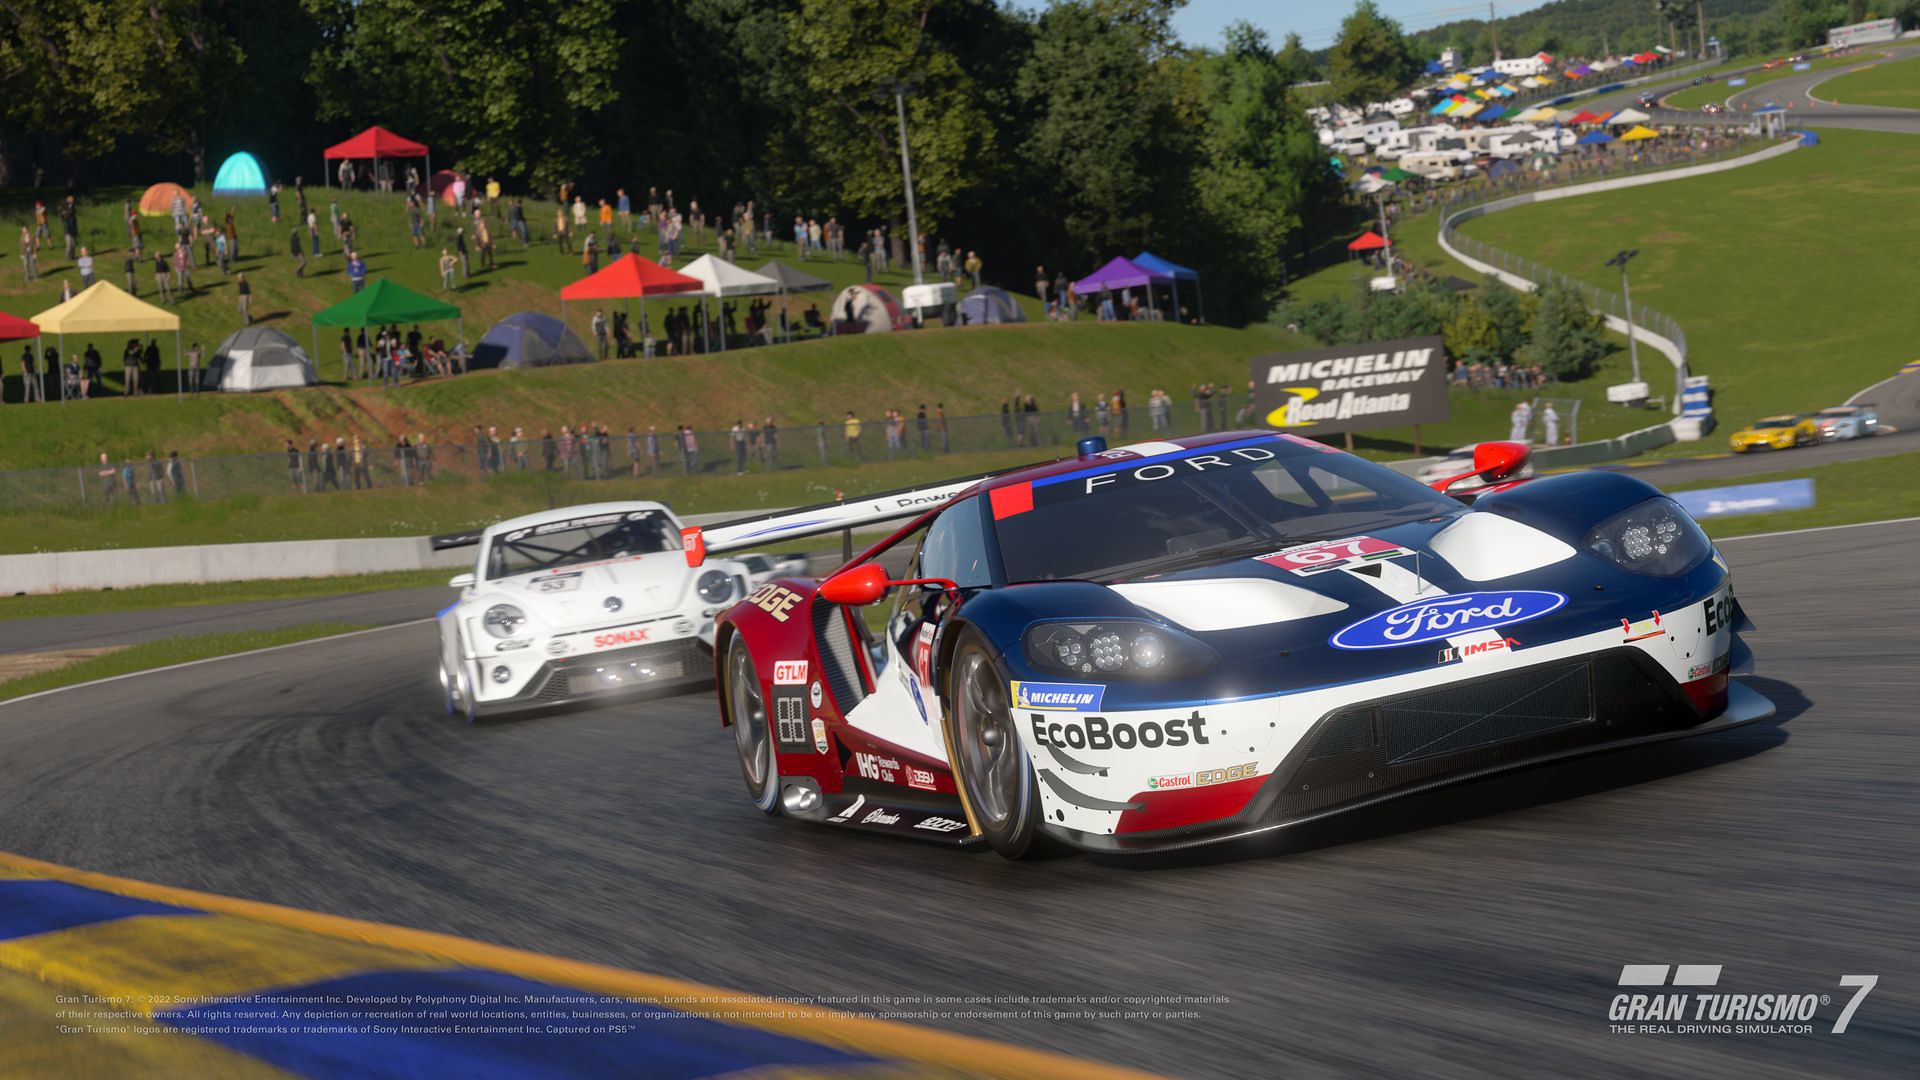 Gran Turismo 7 Update 1.26 features Michelin Raceway Road Atlanta race circuit